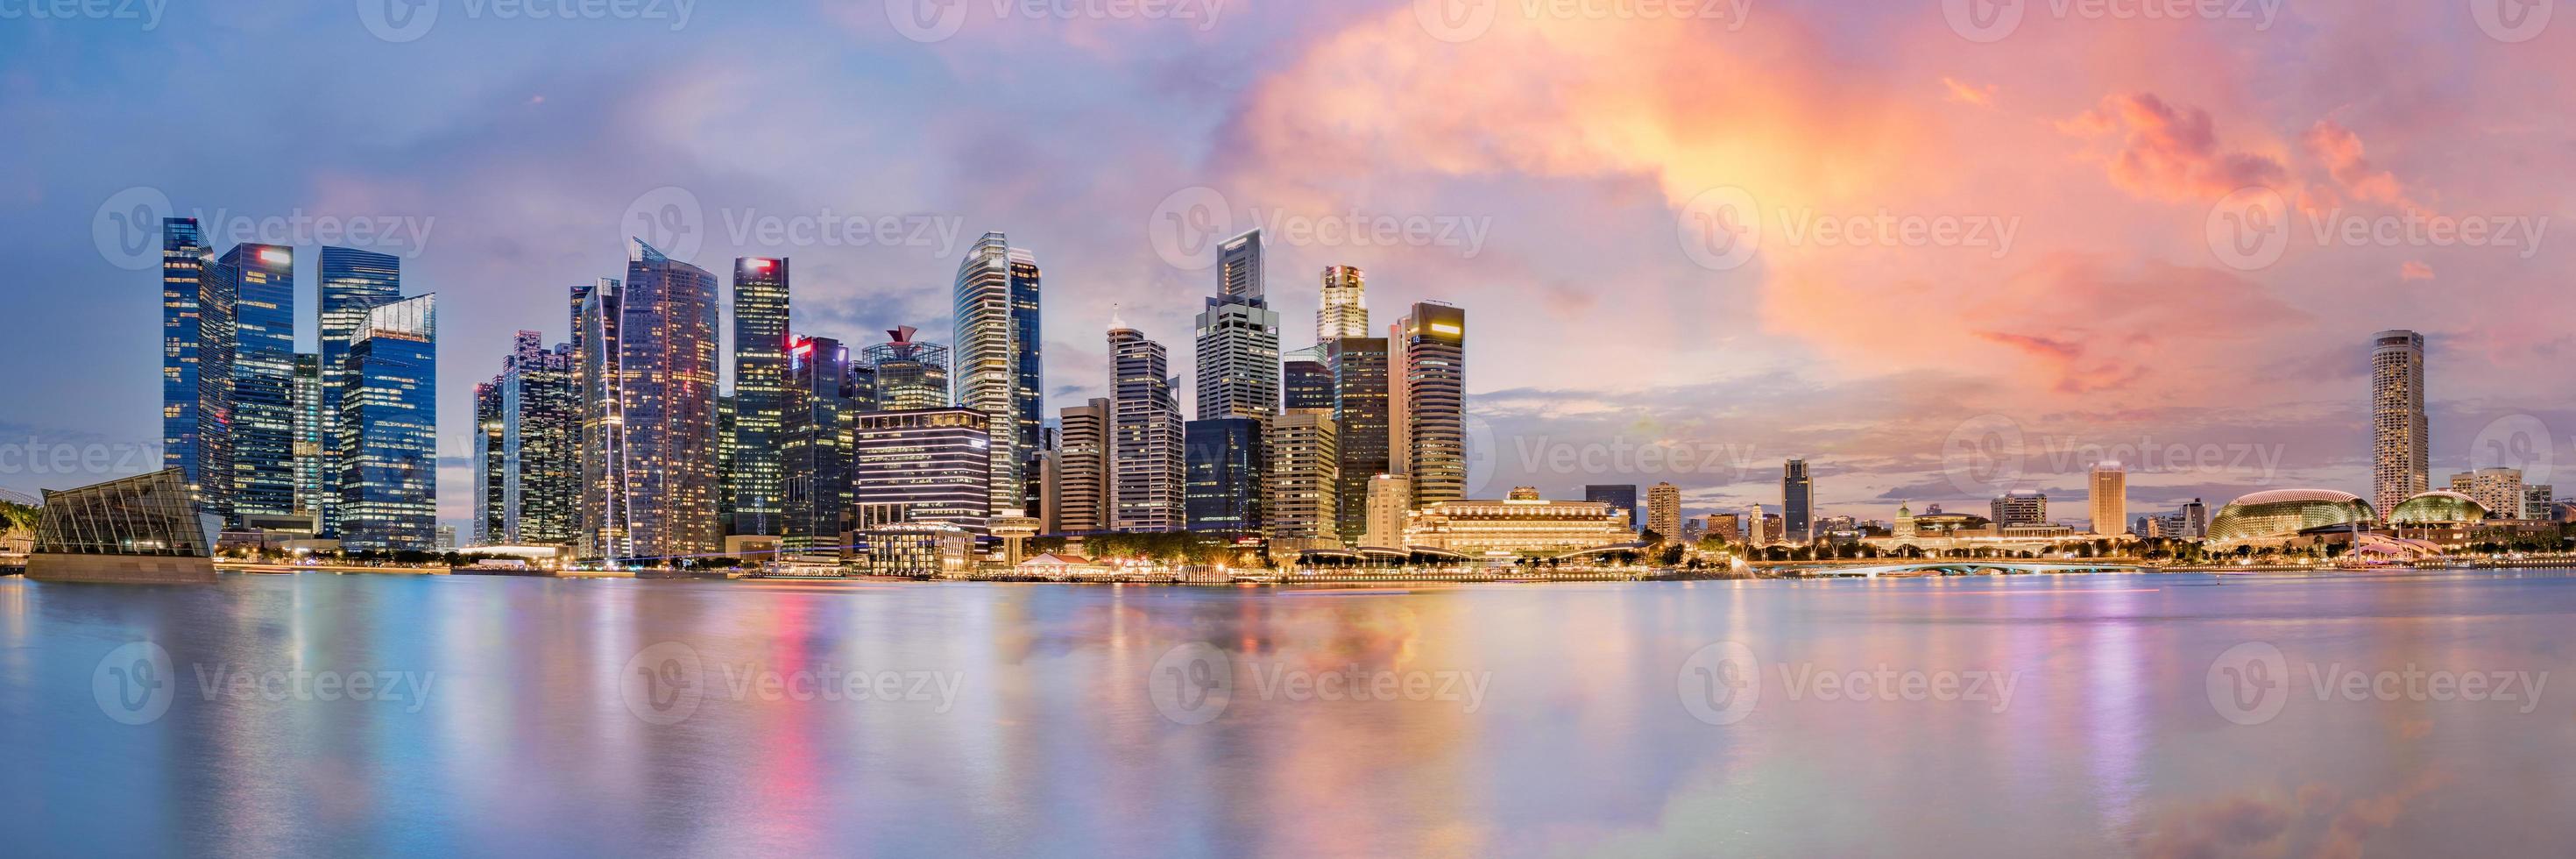 Singapore financial district skyline at Marina bay on twilight time photo